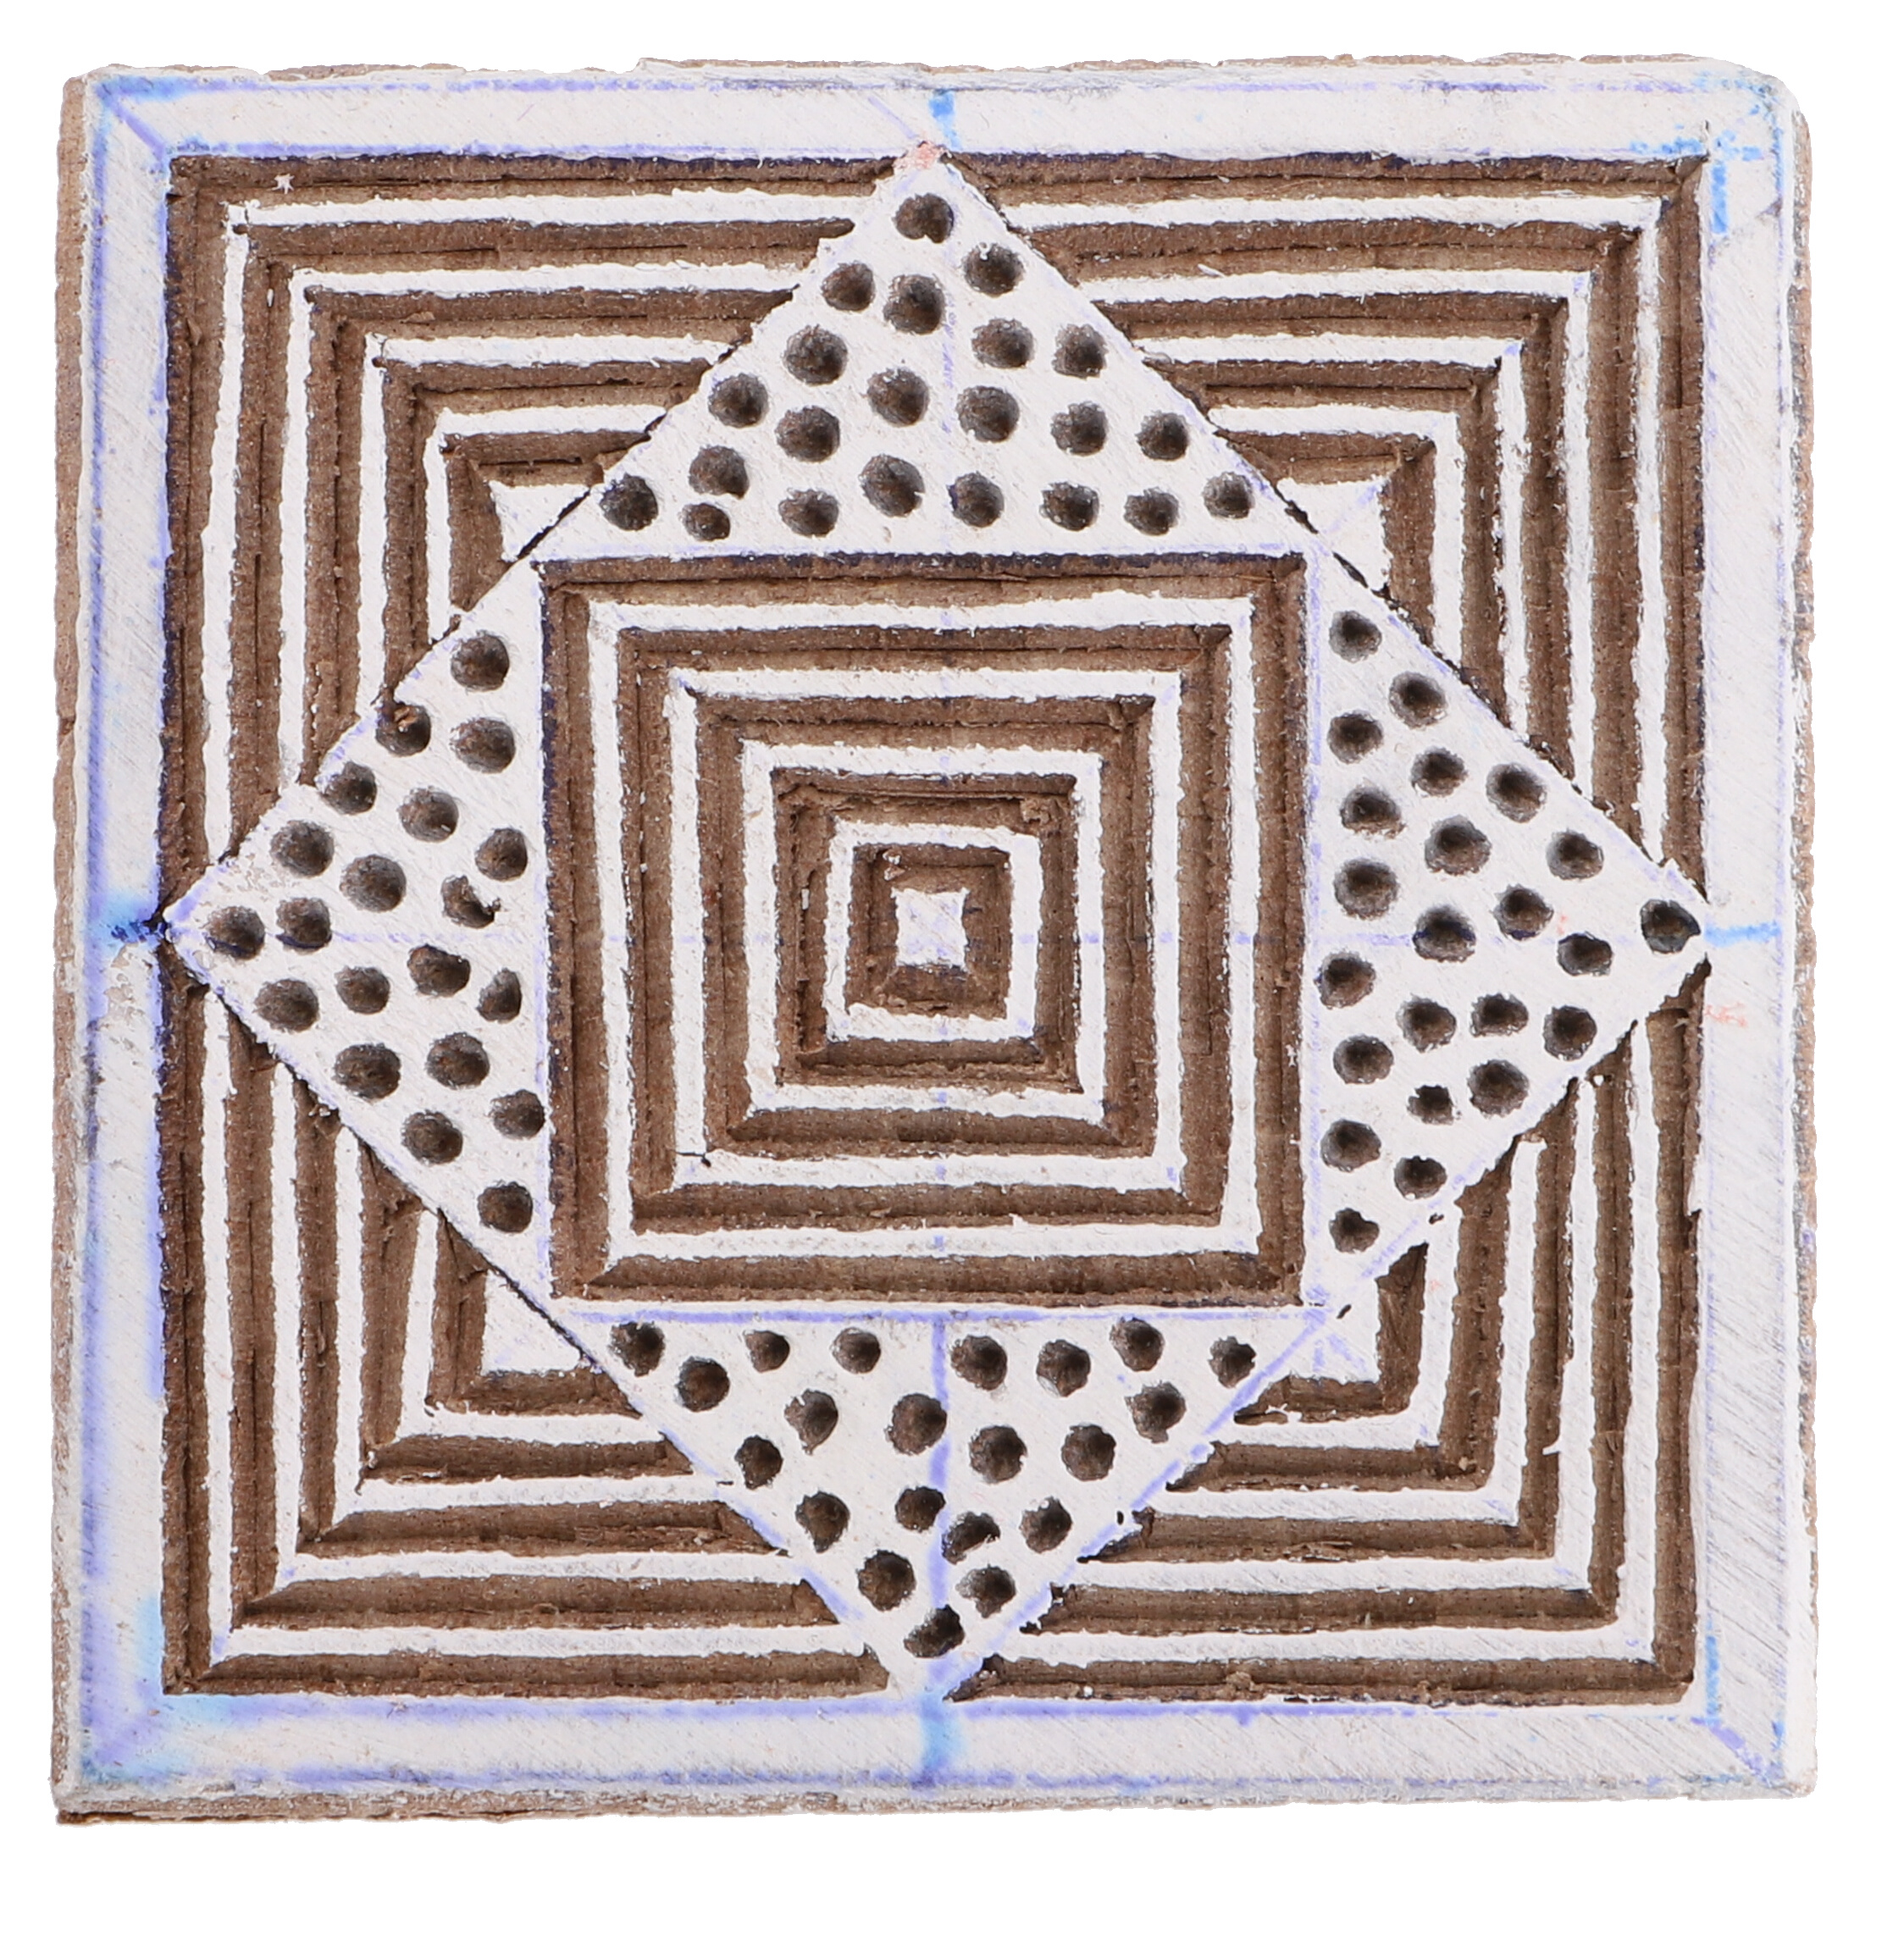 Fisch Stempel Holz Stempel Indischen Handdruck Block Textil-Stempel Sehnte